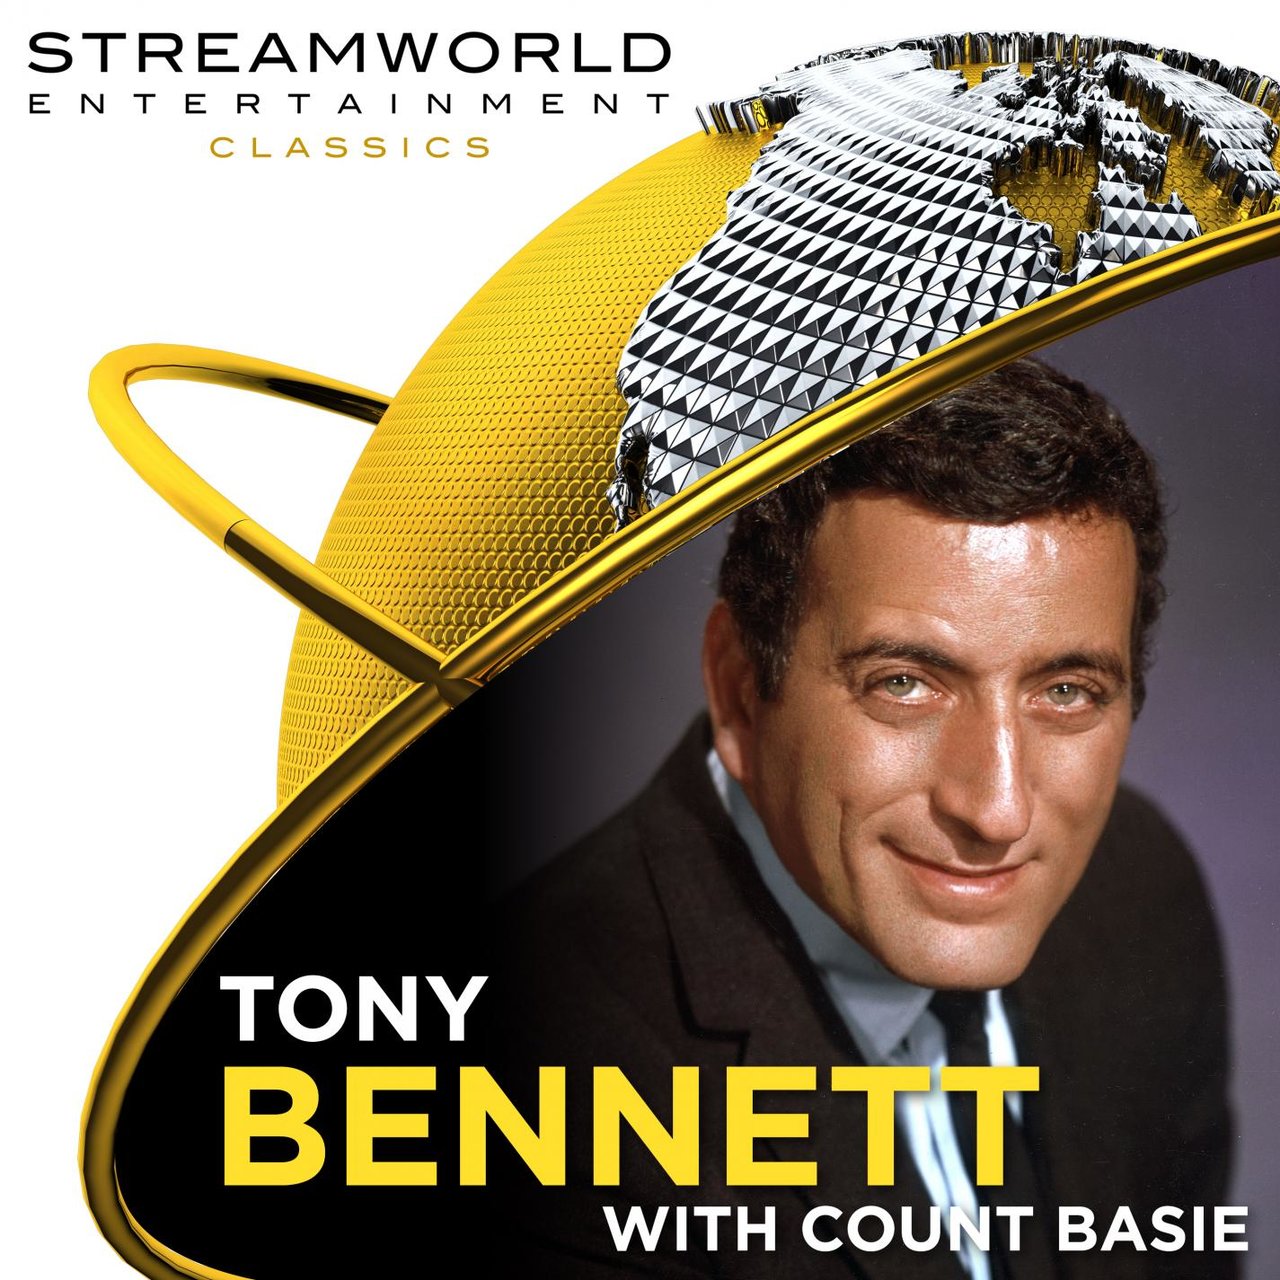 Tony Bennett With Count Baise [1998]